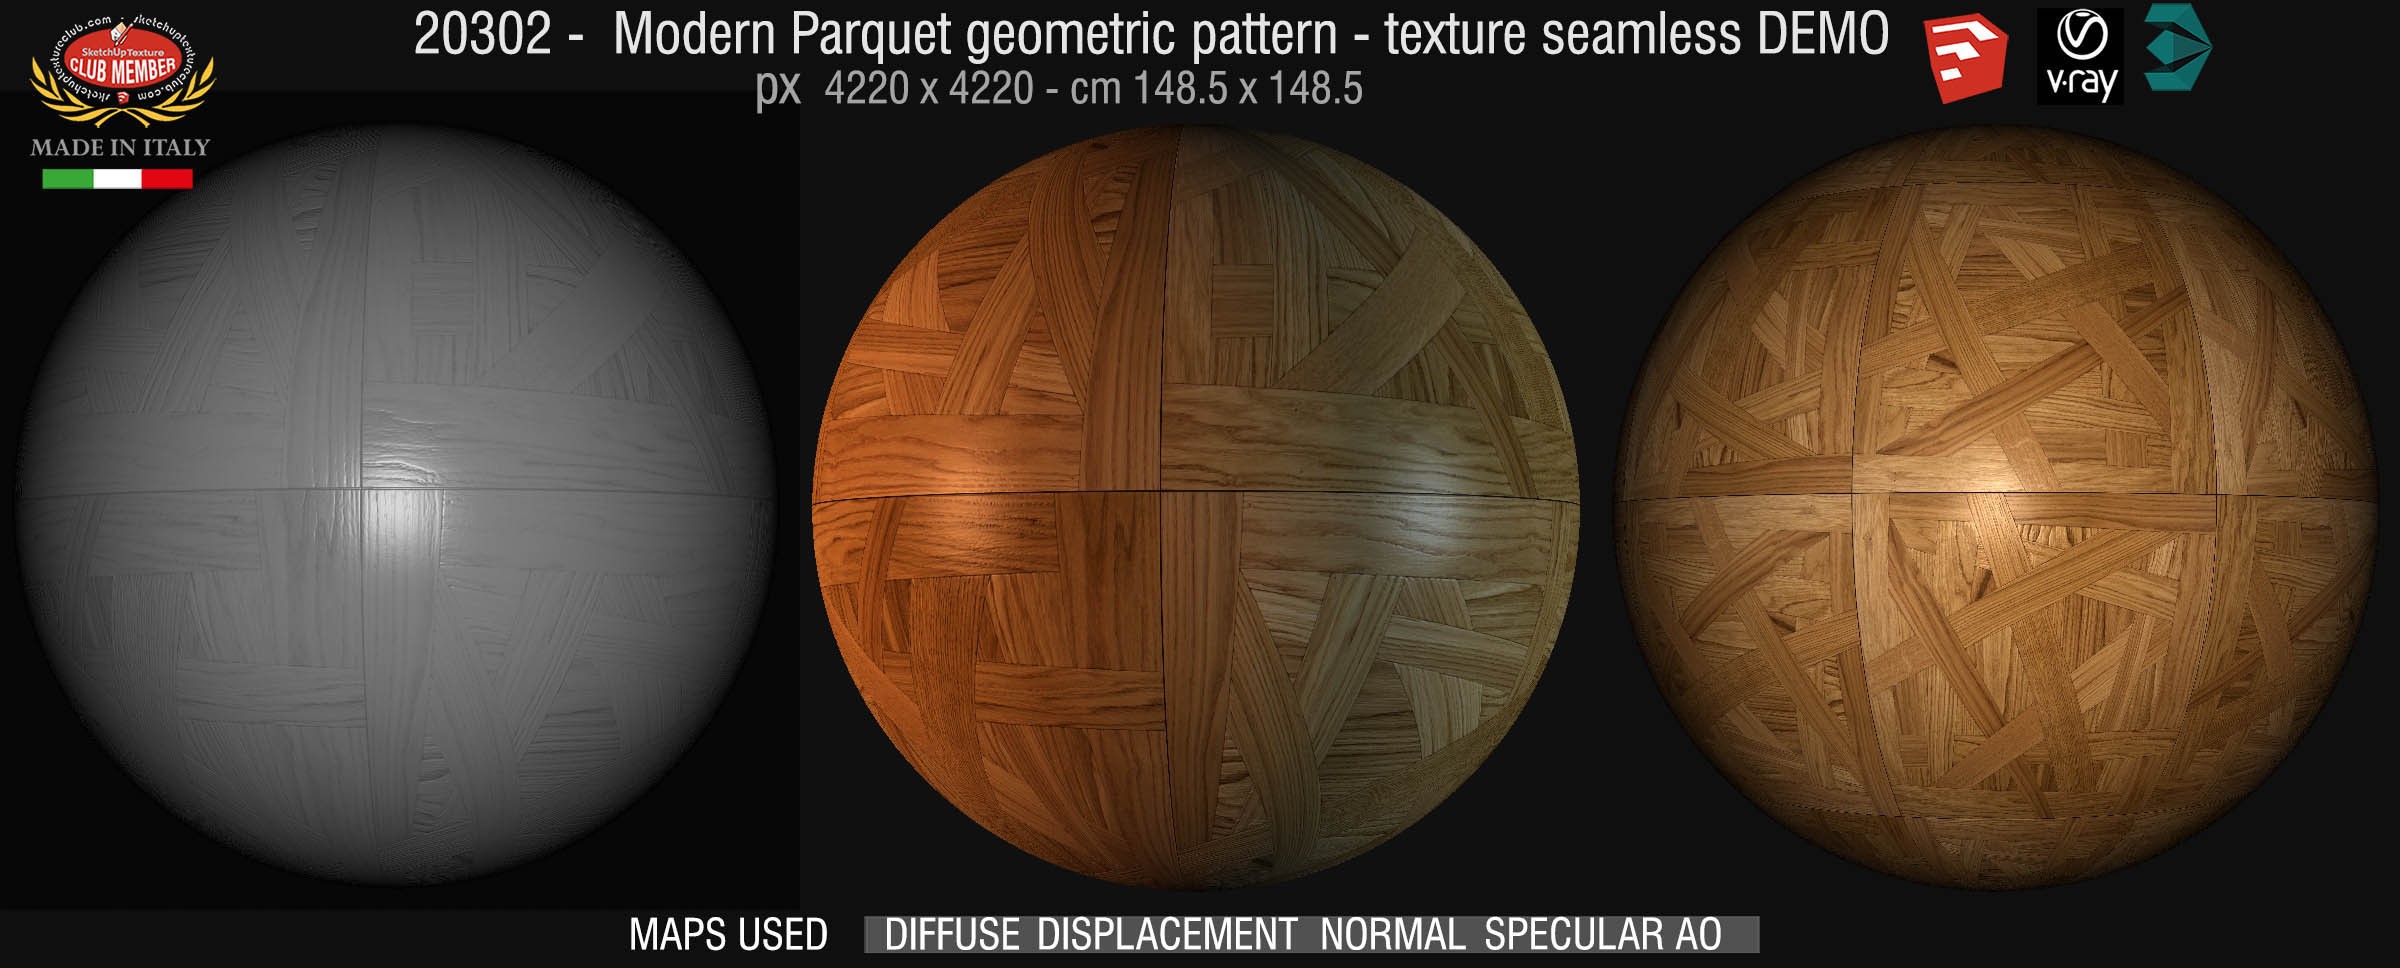 20302 Modern Parquet geometric pattern texture seamless + maps DEMO